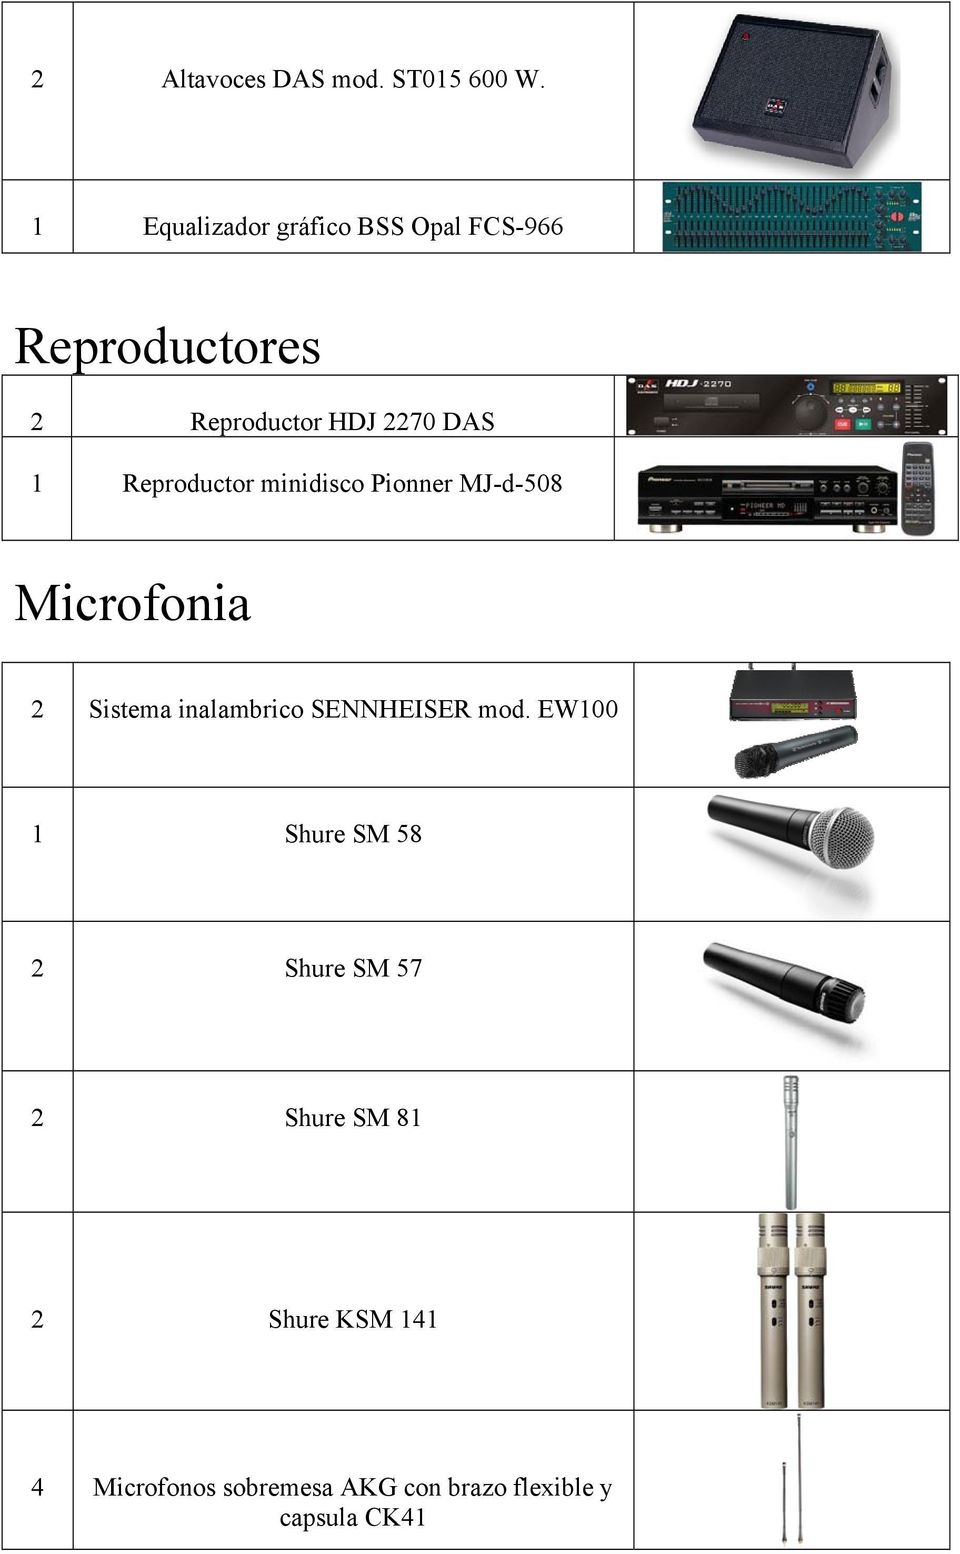 Reproductor minidisco Pionner MJ-d-508 Microfonia 2 Sistema inalambrico